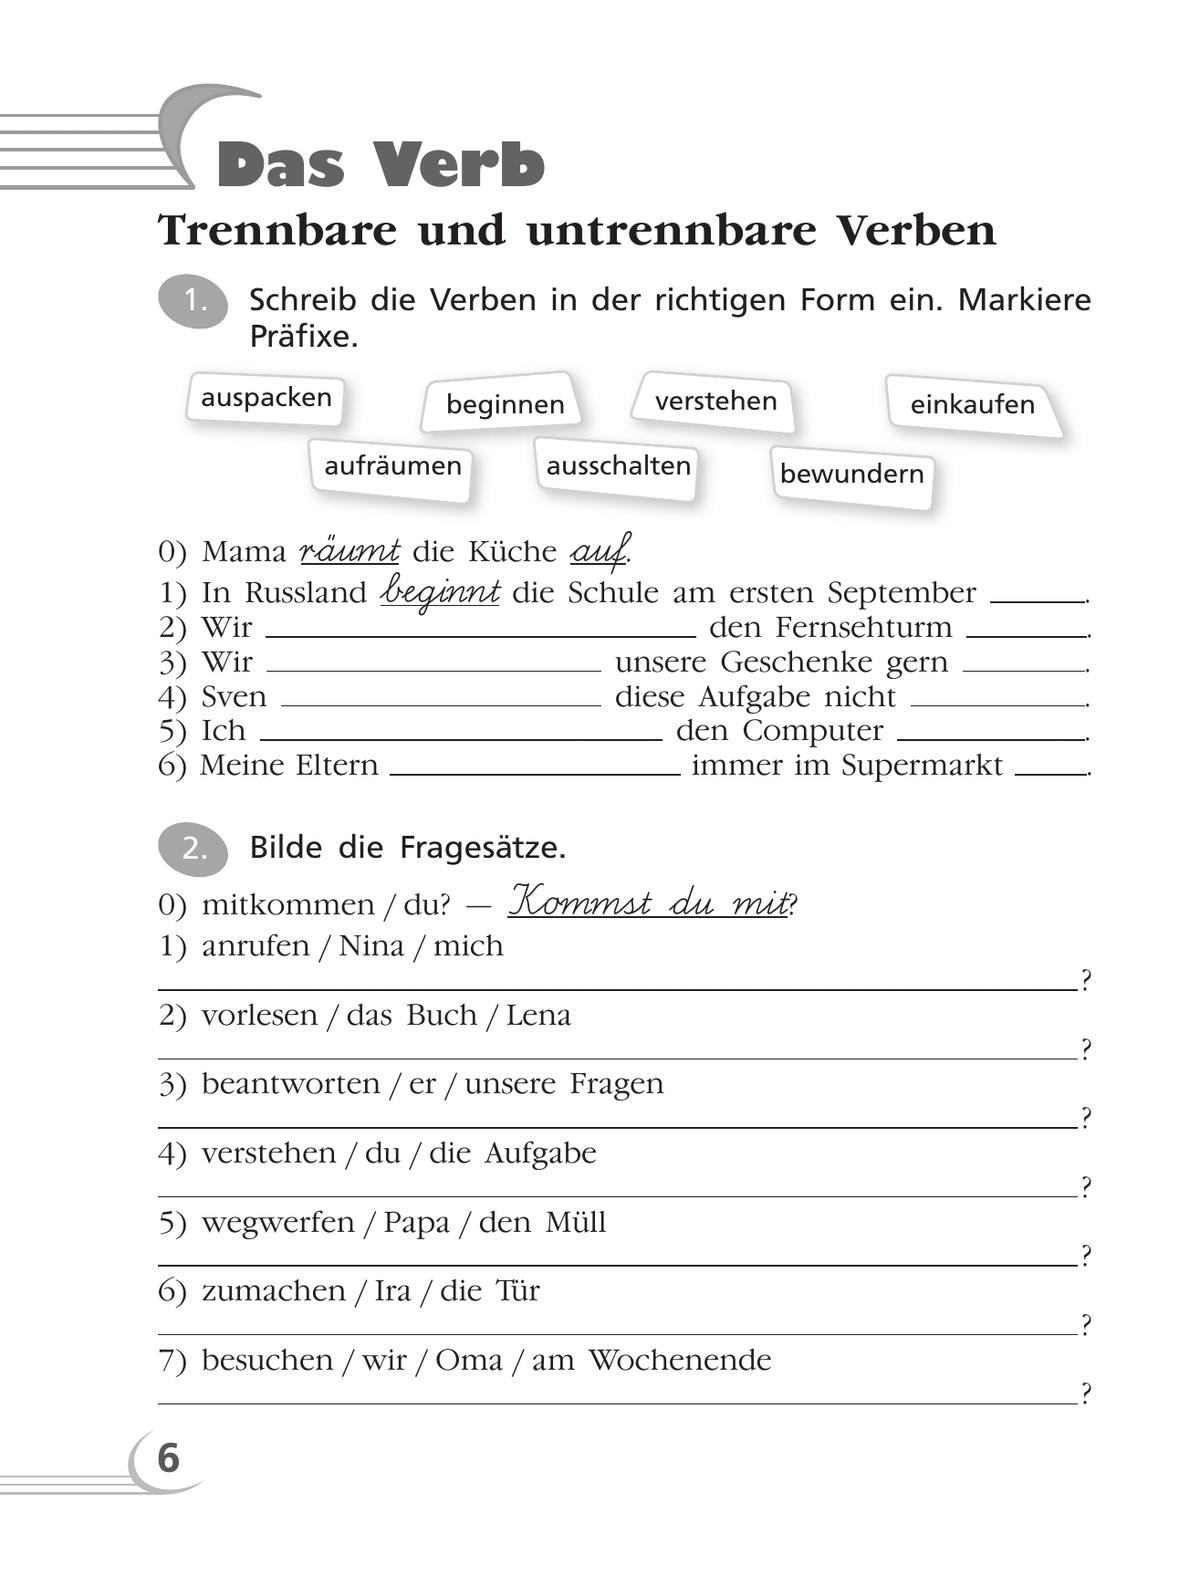 Немецкий язык. Грамматический тренажер. 5-6 классы 2